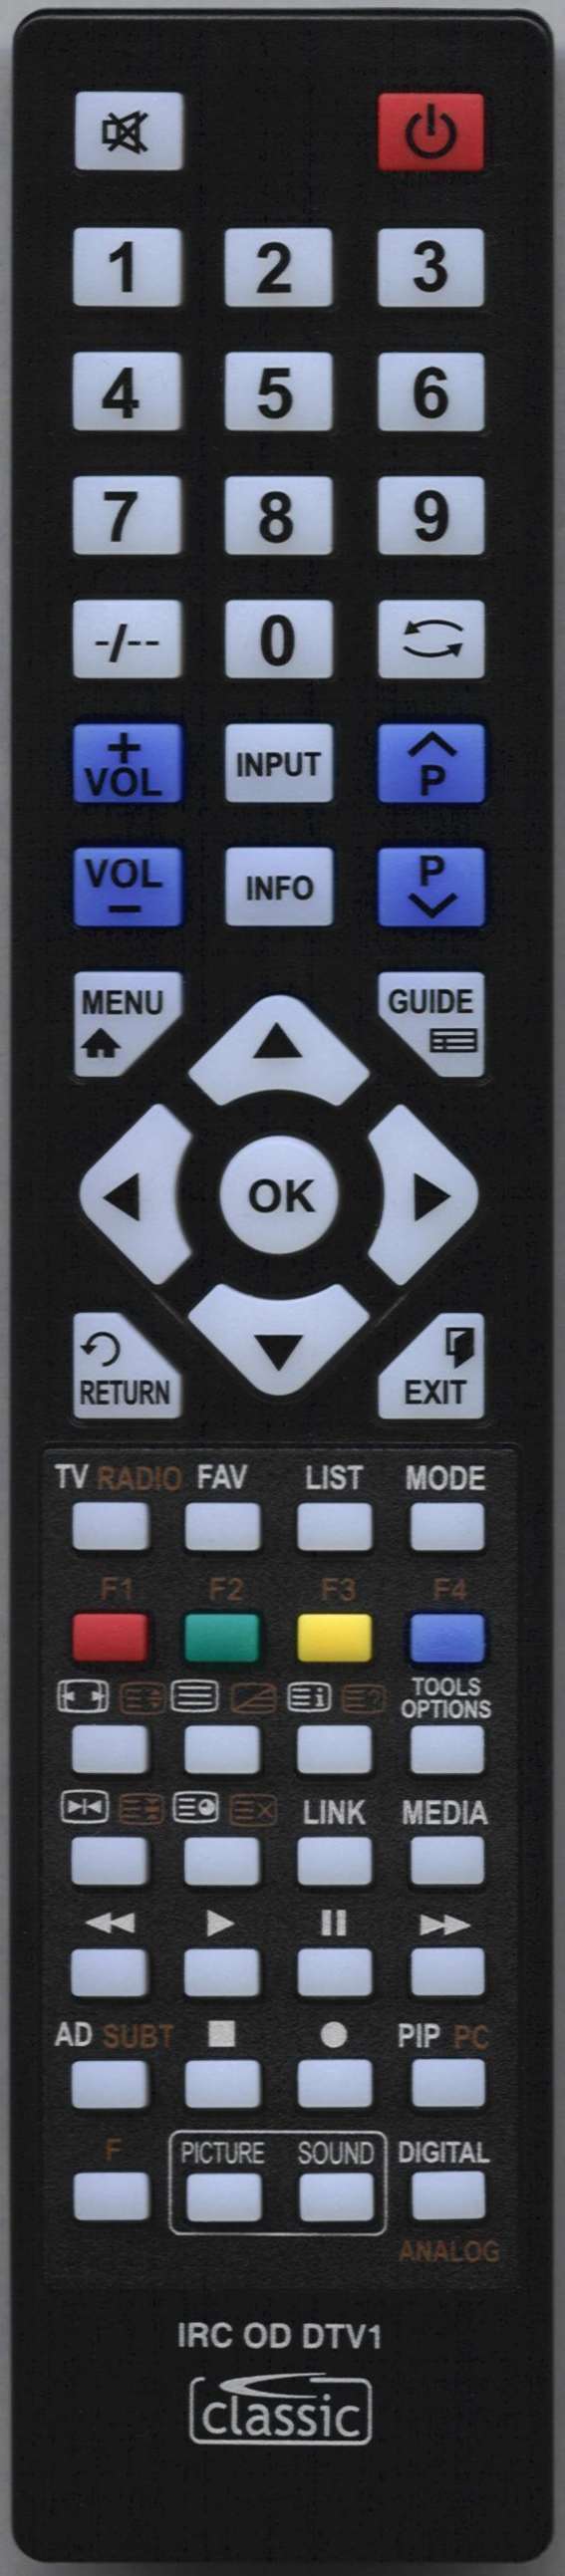 Sony KDL32R433B Remote Control Alternative